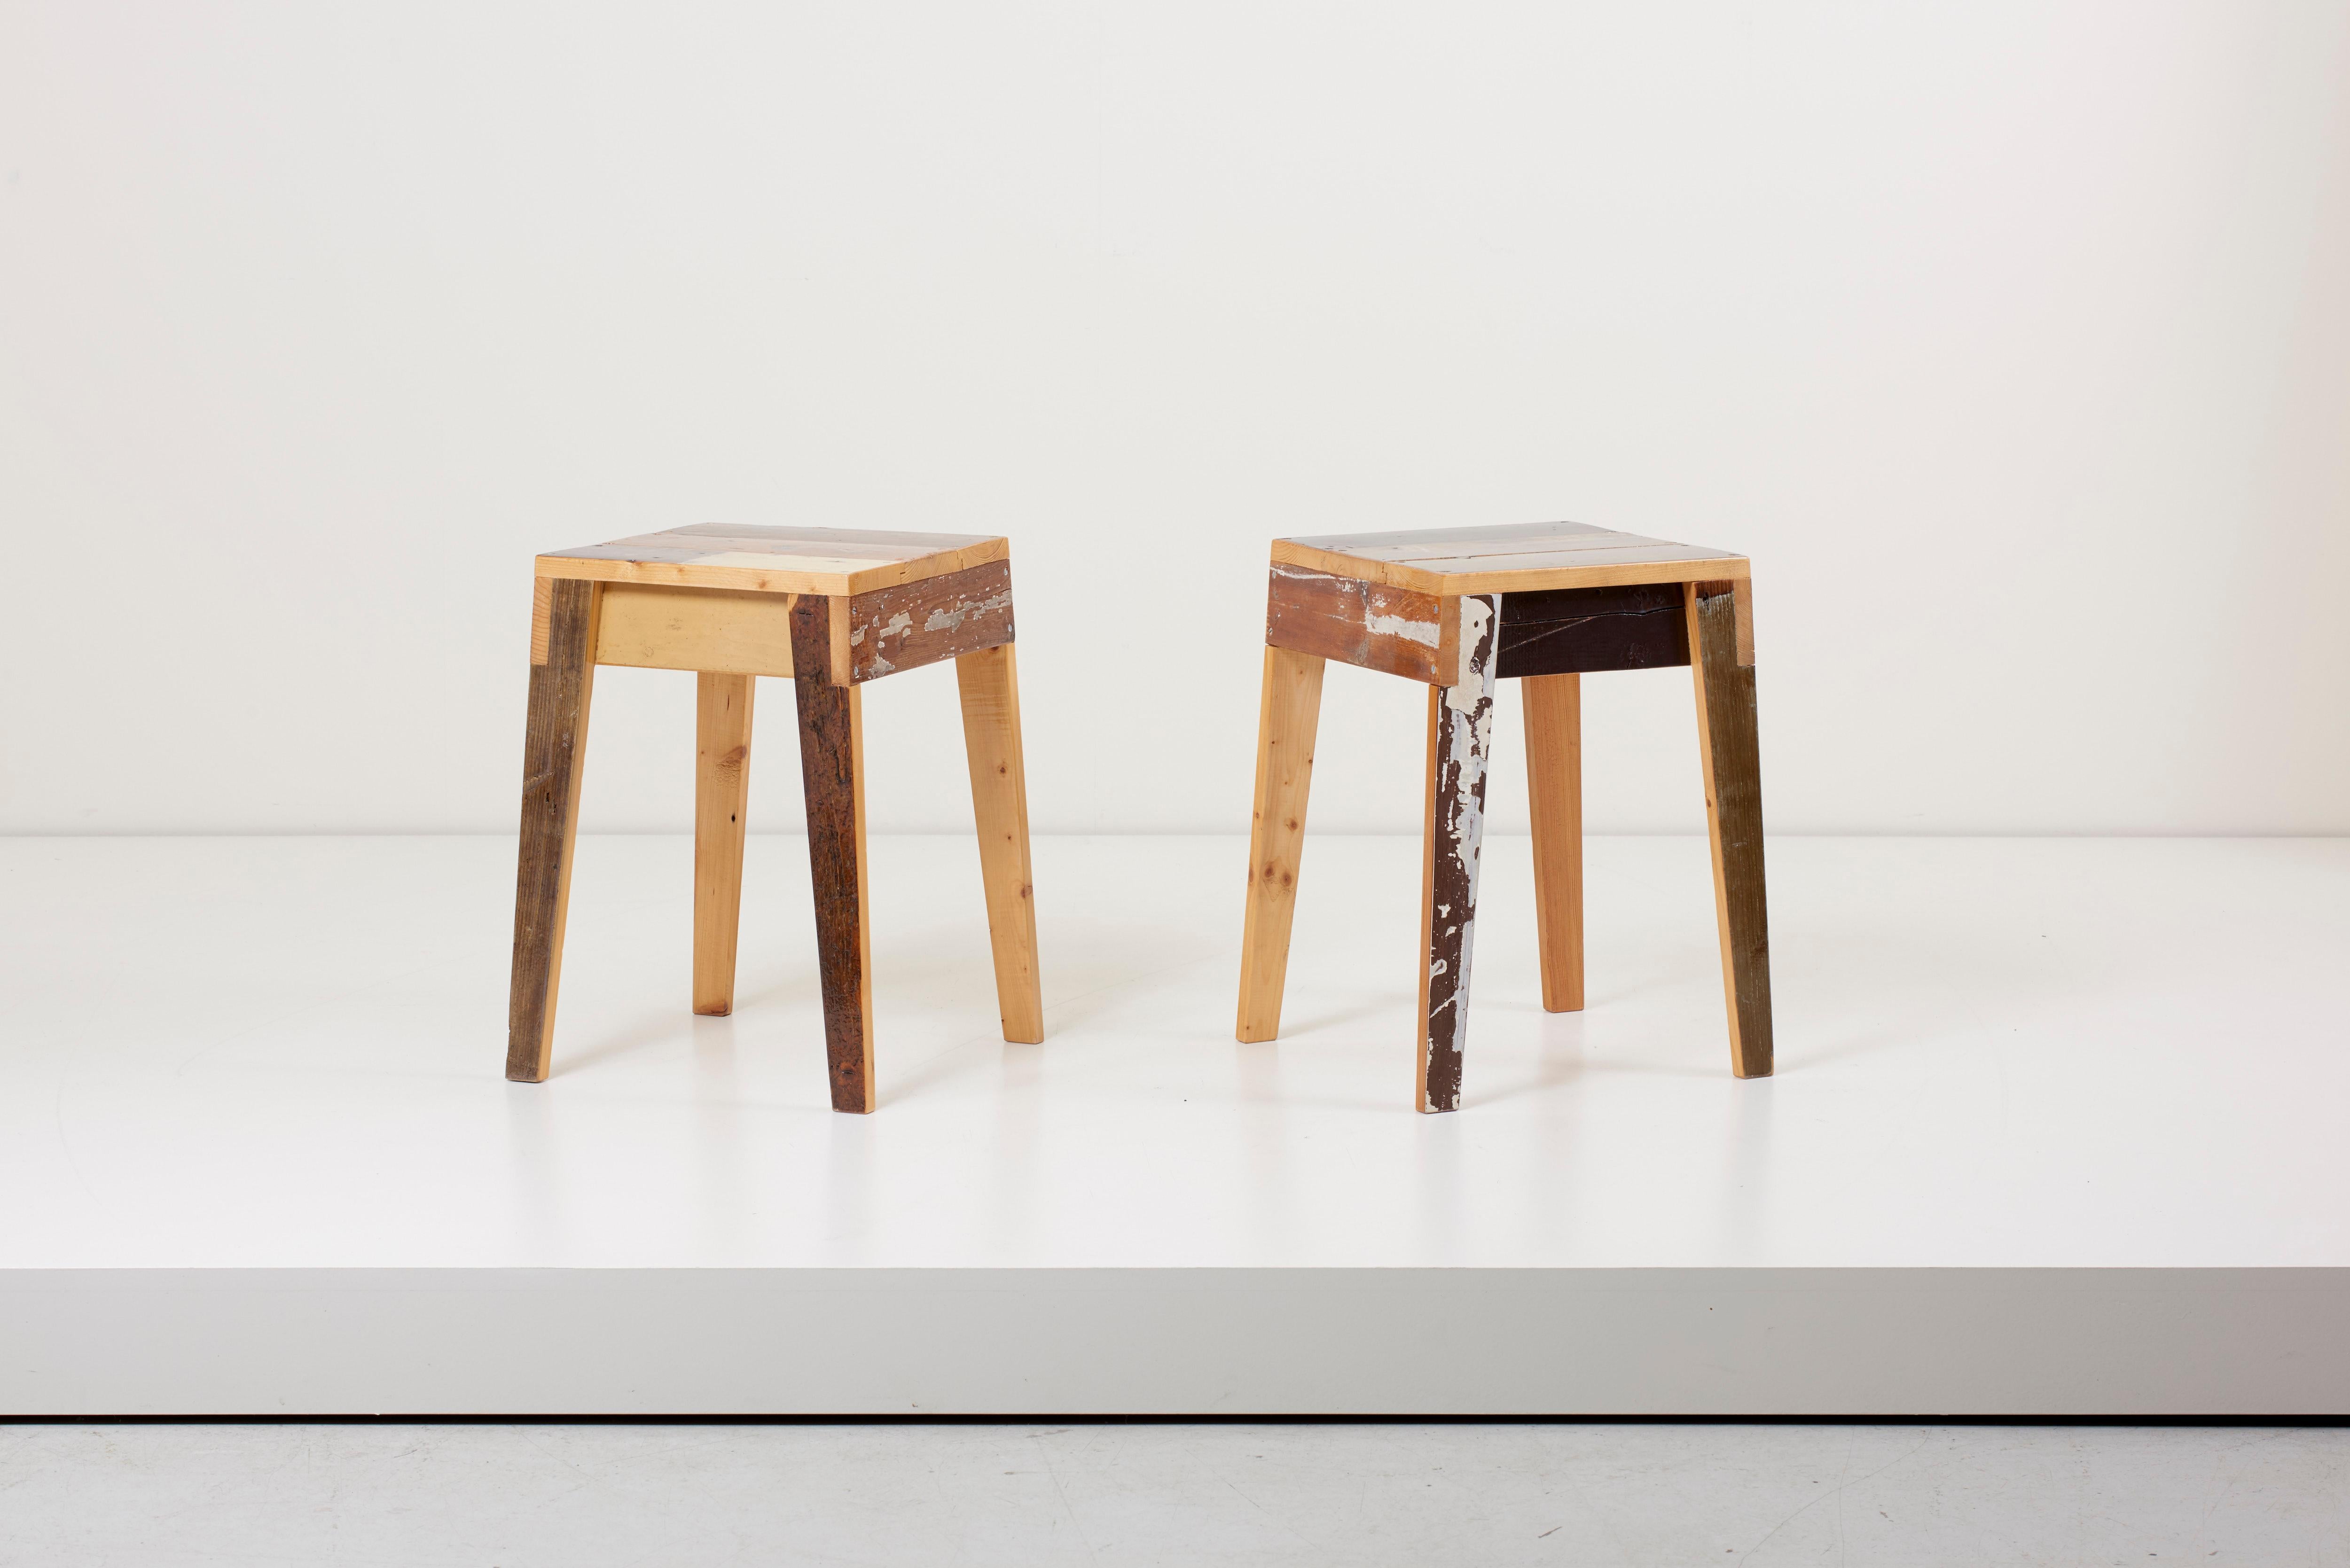 Pair of scrapwood stools in lacquered oak made of reclaimed wood by Piet Hein Eek.